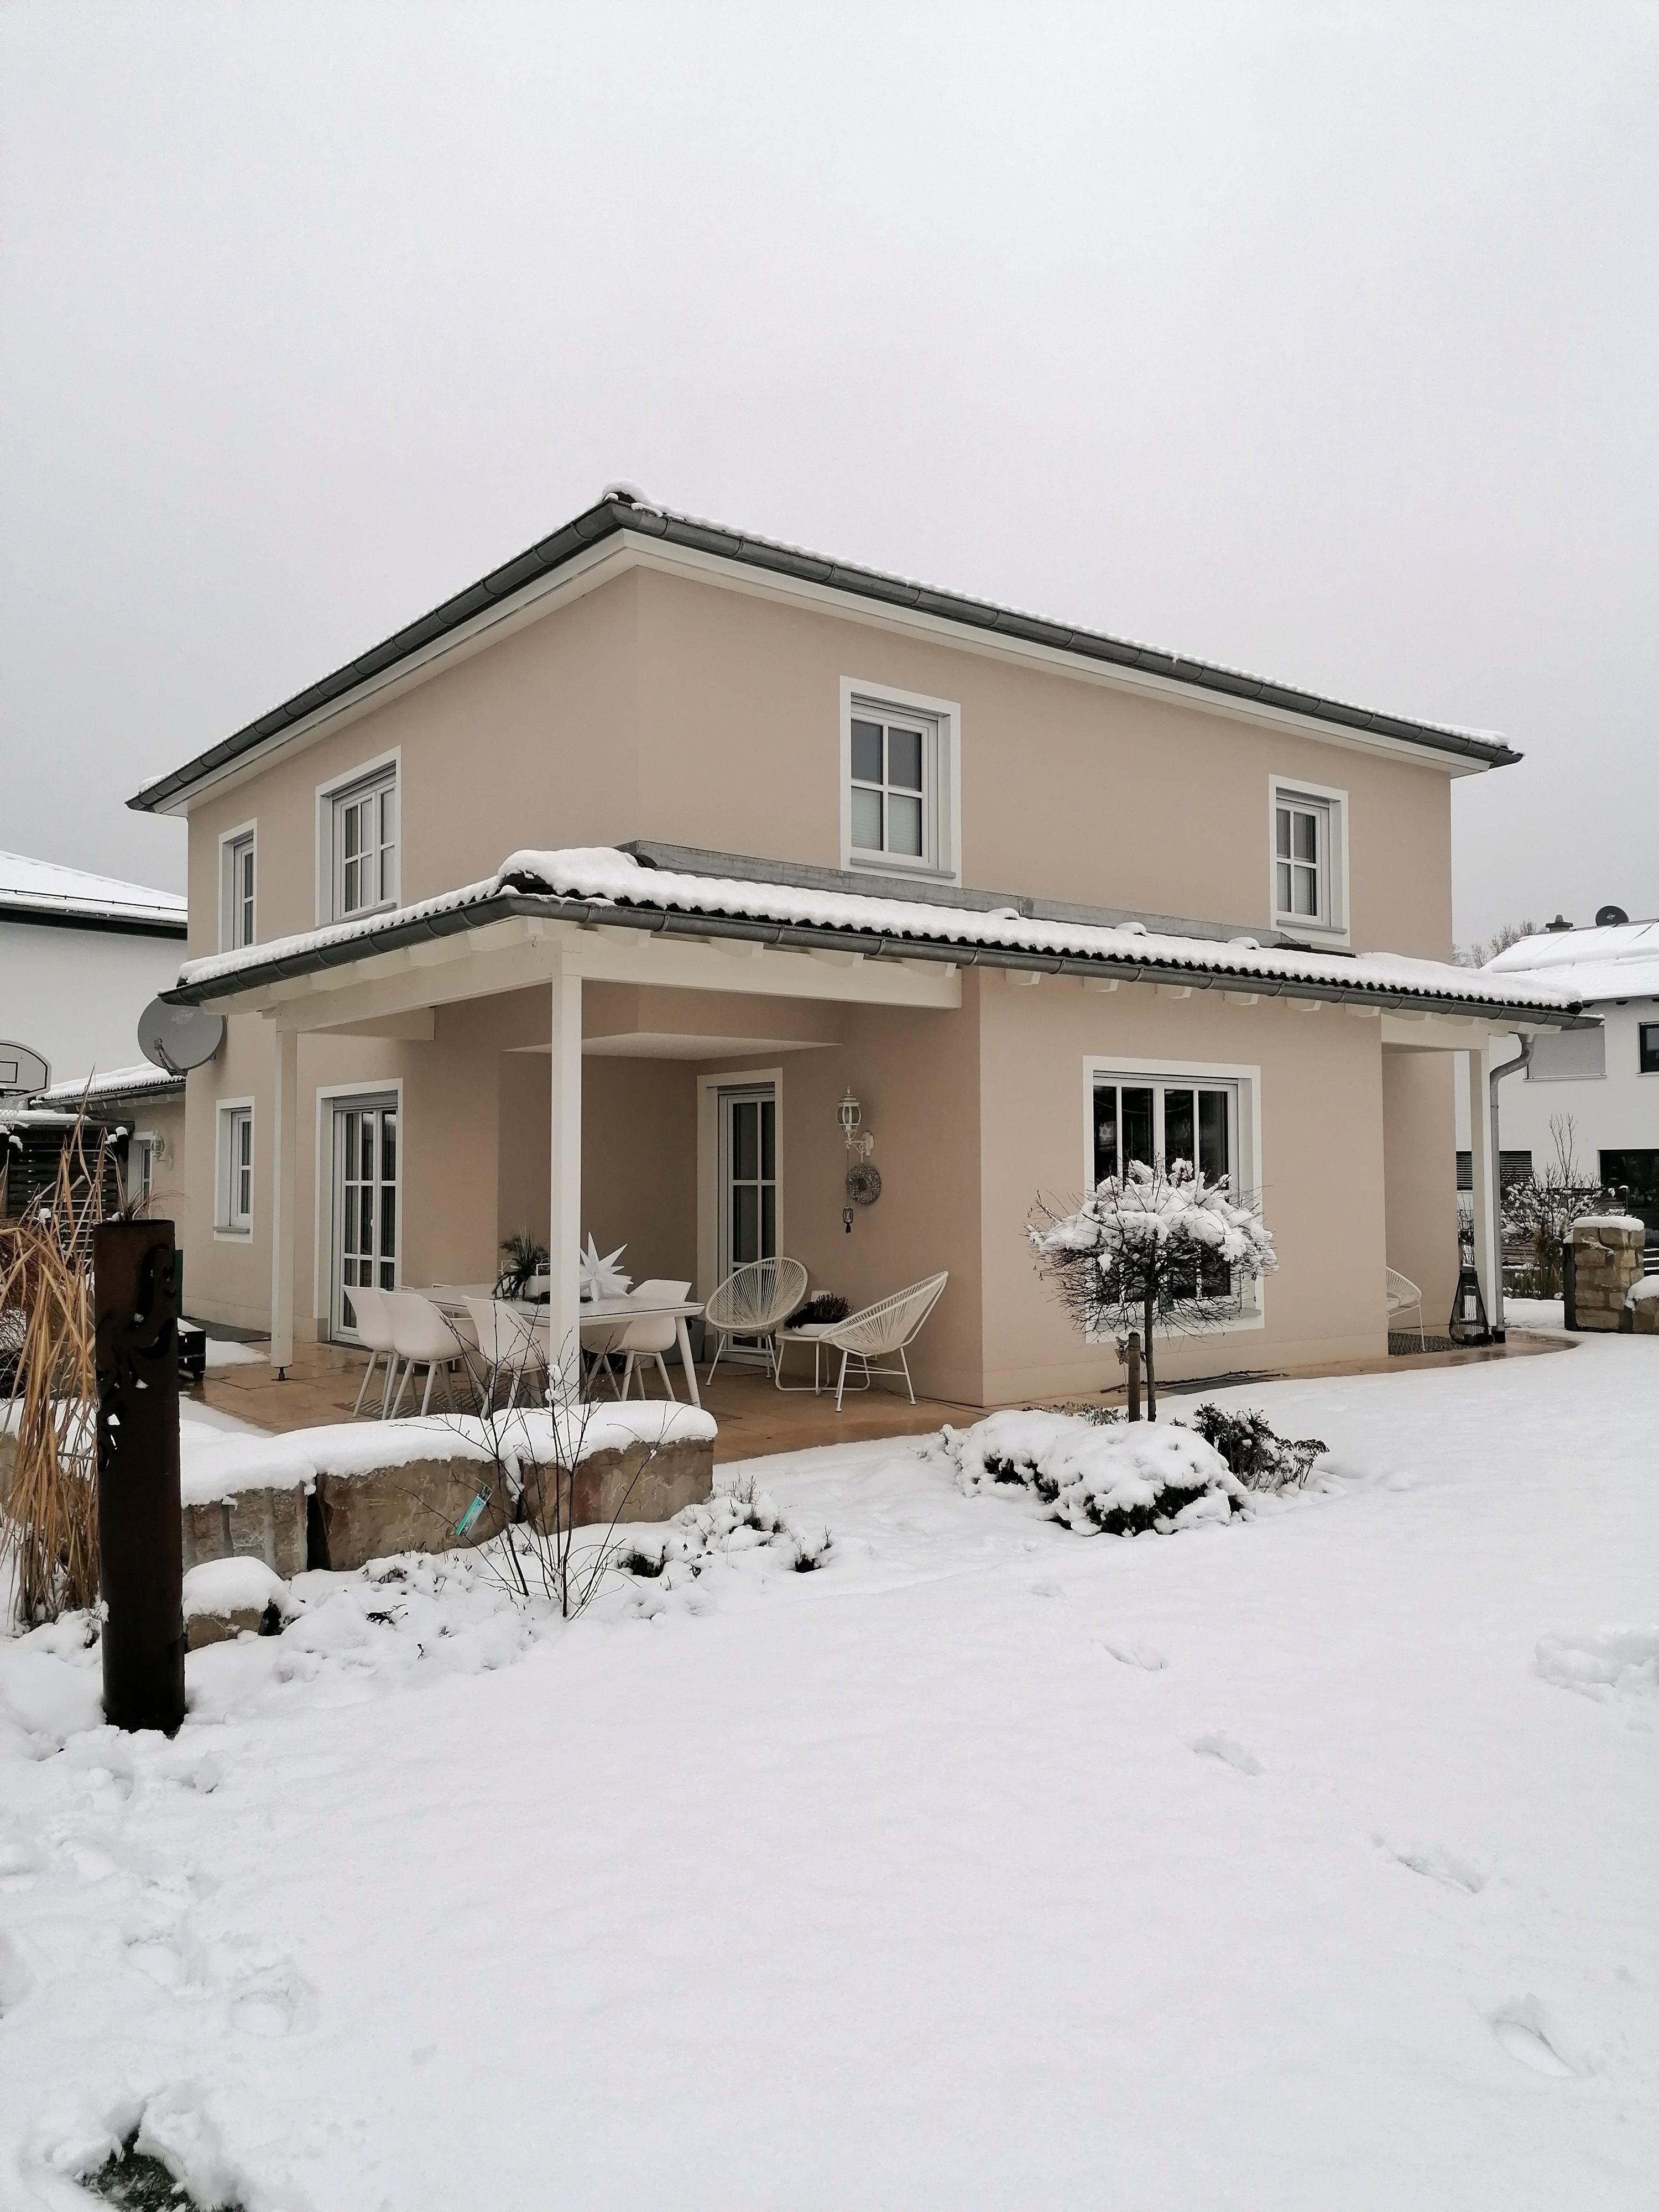 #winterwonderland #toskanahaus #stadtvilla2021 #terassengestaltung #teracce #stadtvilla #walmdach 